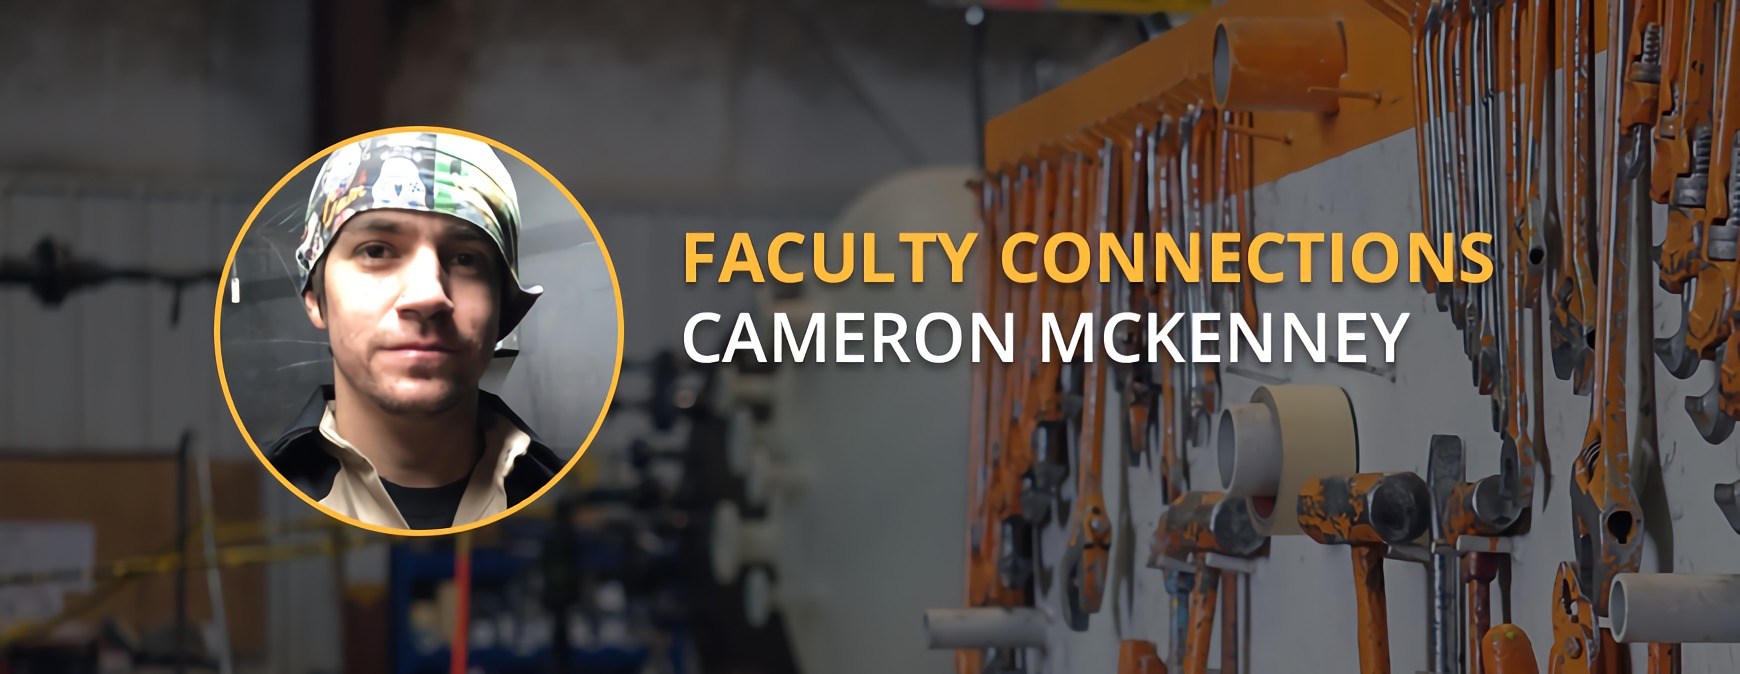 Faculty Connections - Meet Cameron MacKenney - Tulsa Welding School